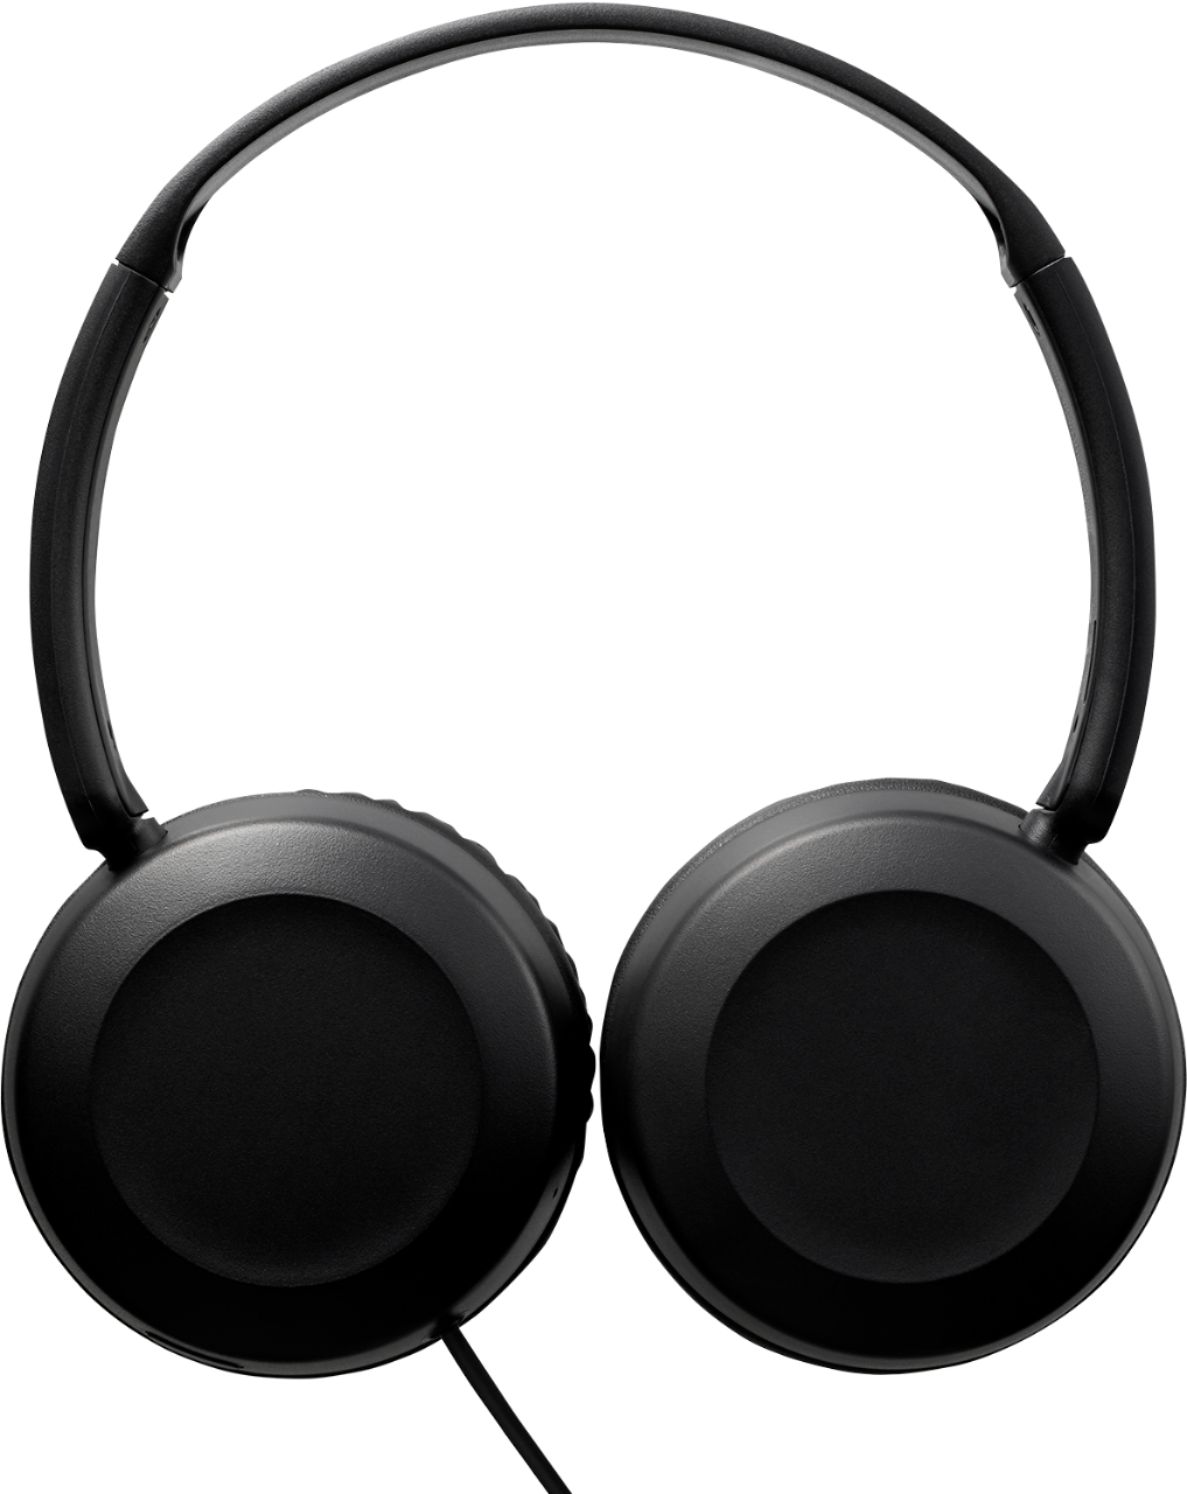 Angle View: JVC - Powerful Sound On Ear Headphones - Black